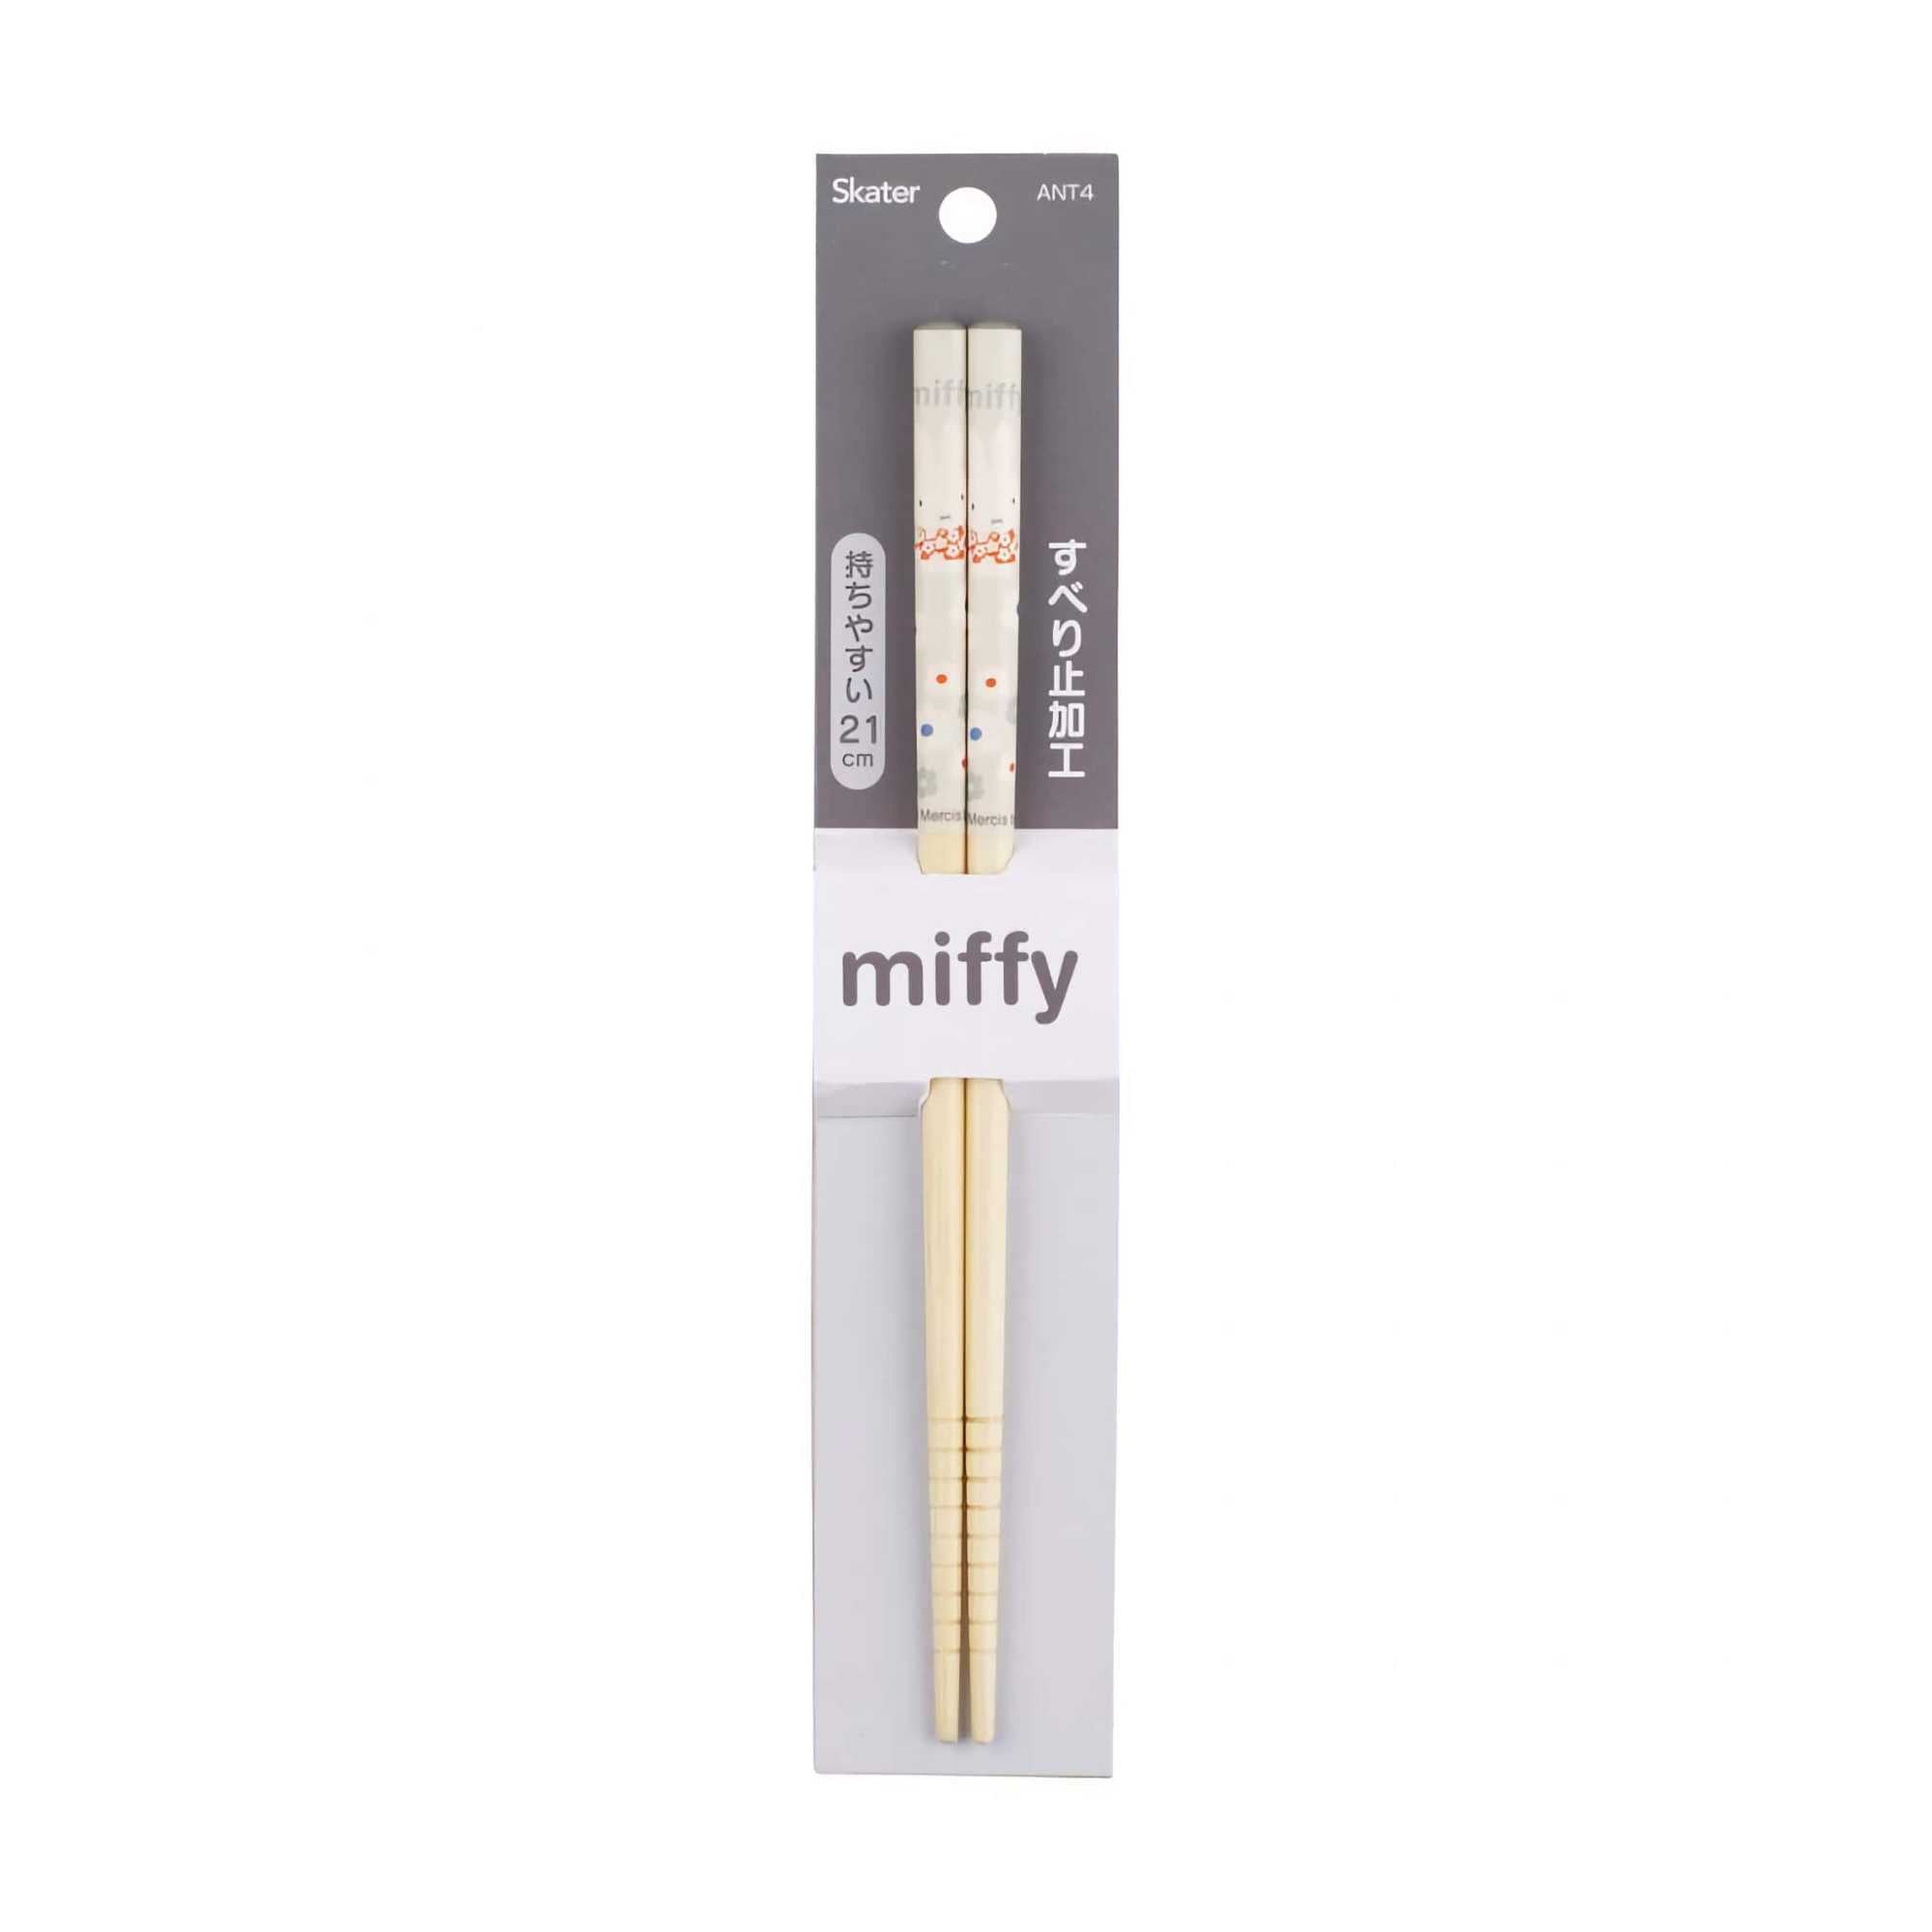 Miffy Chopsticks, Monotone